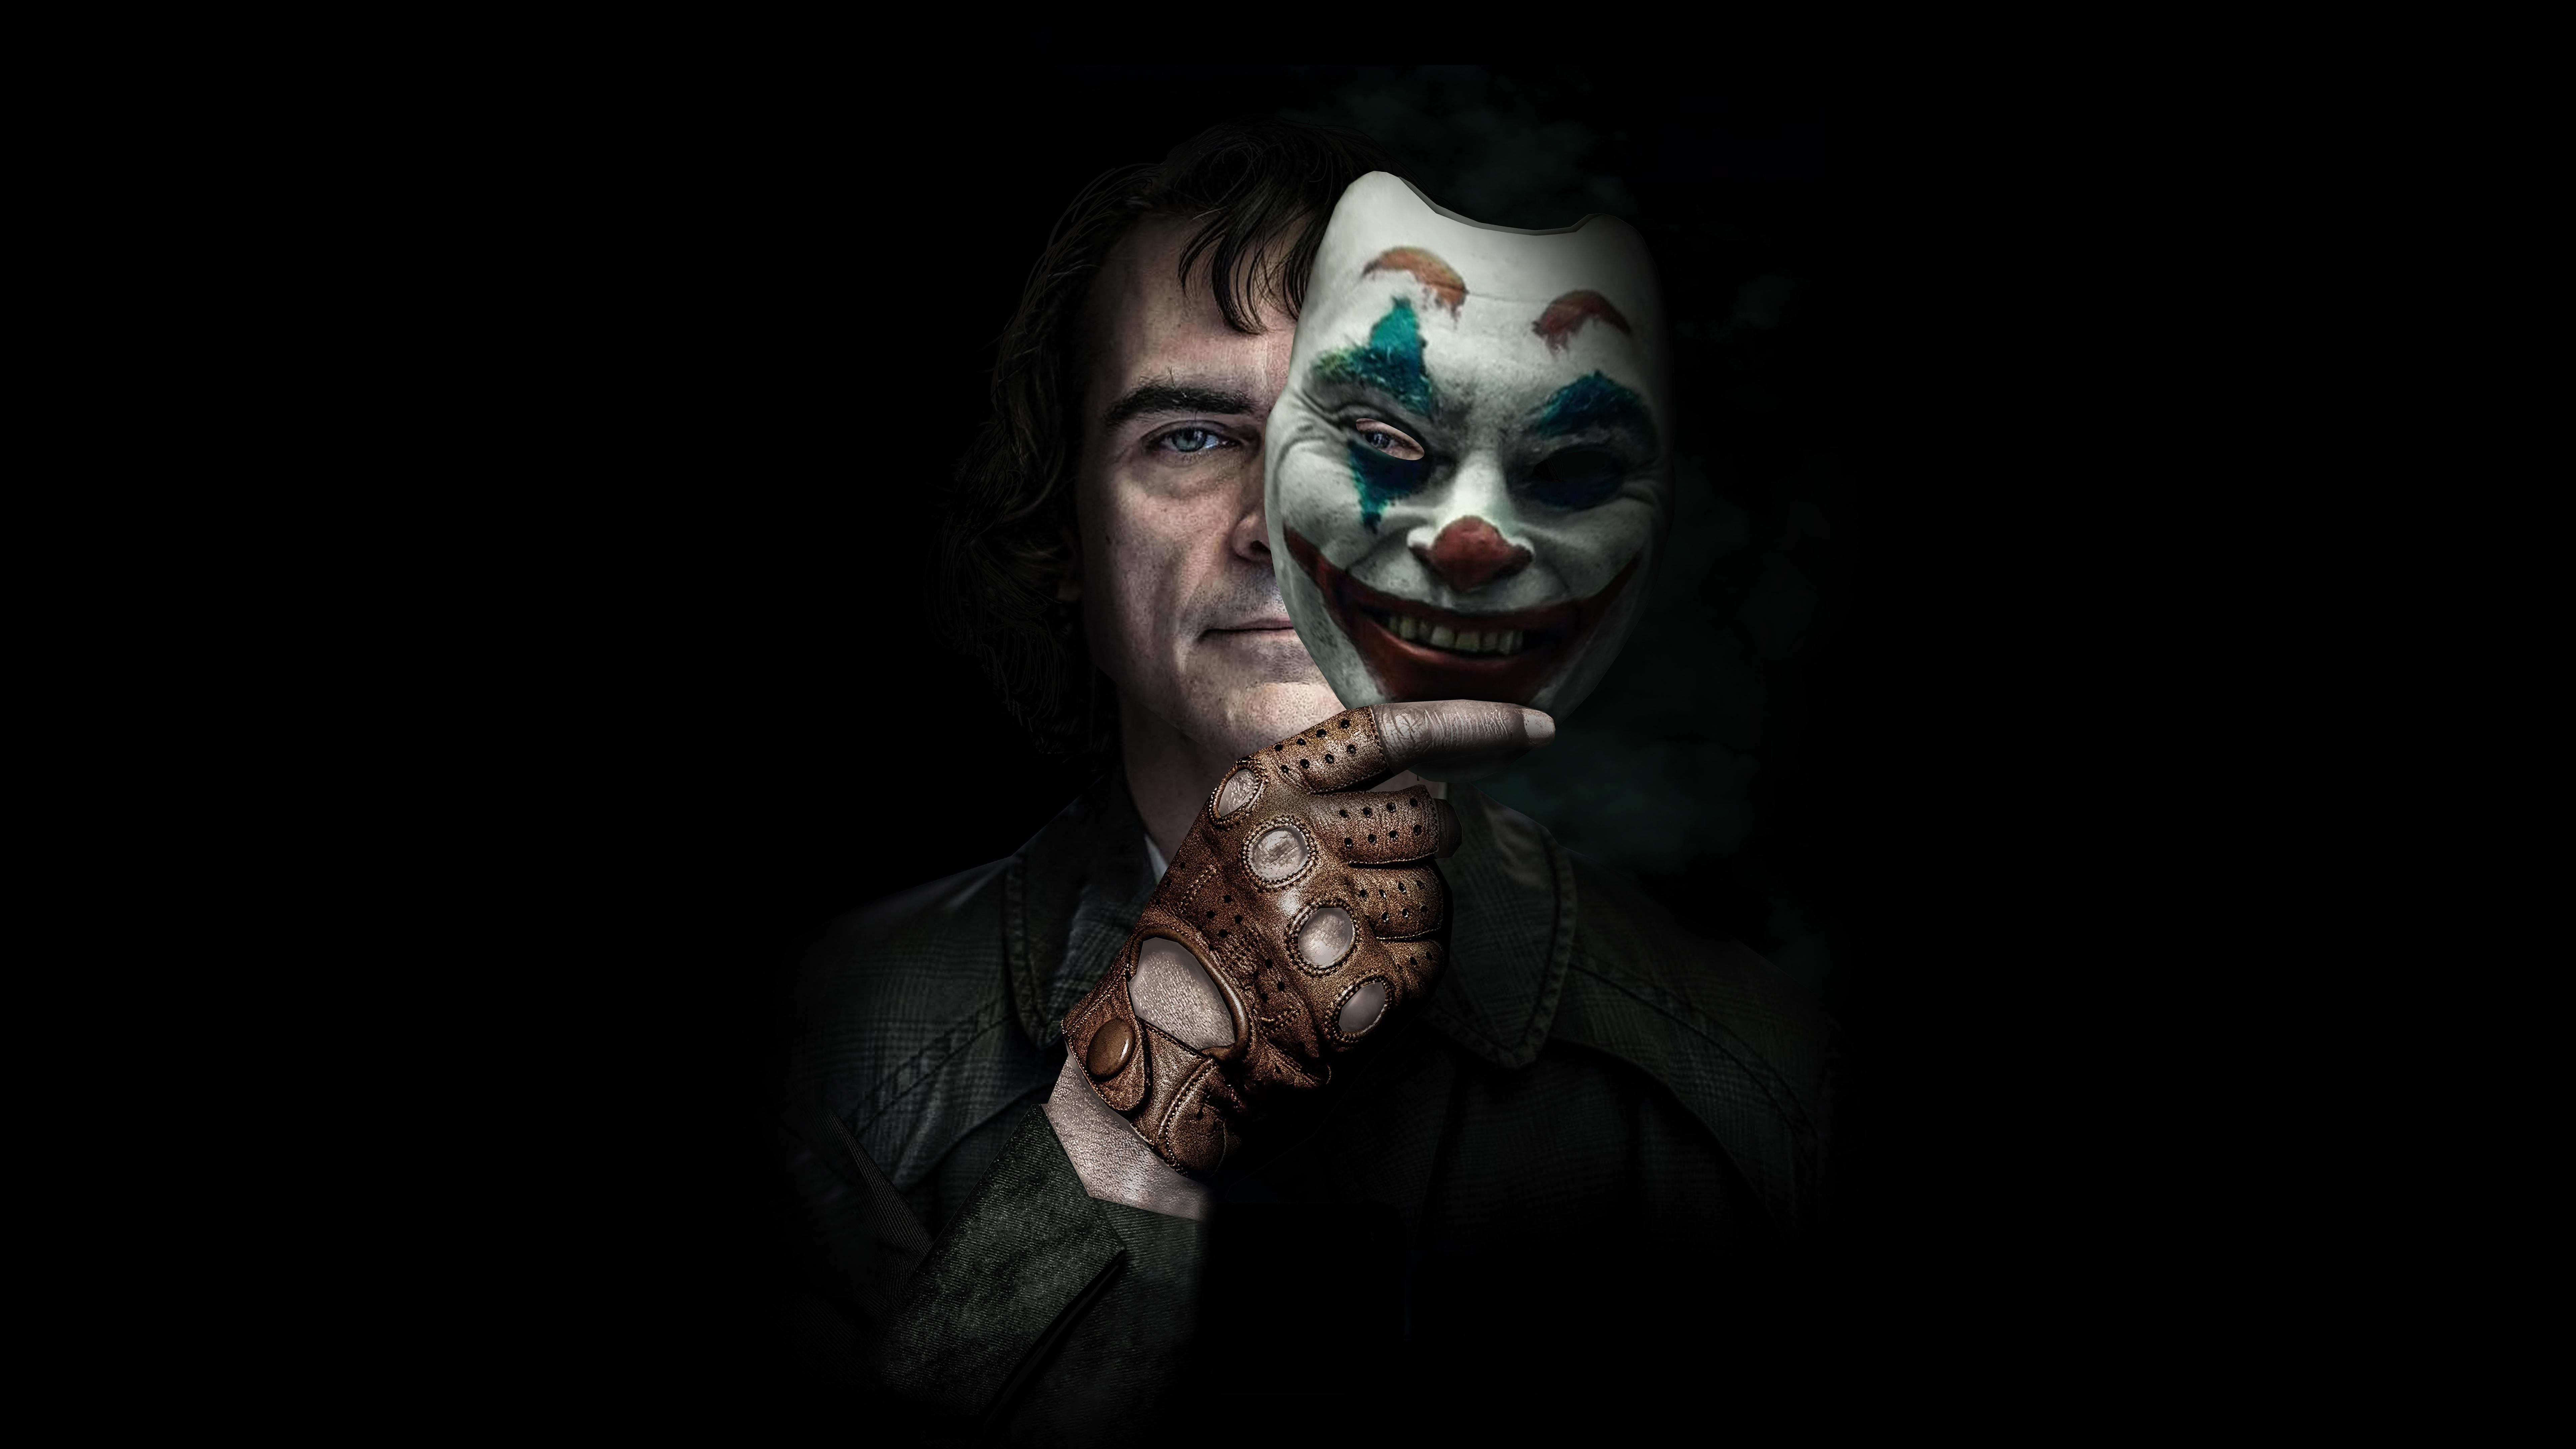 Joker Photos - mask man